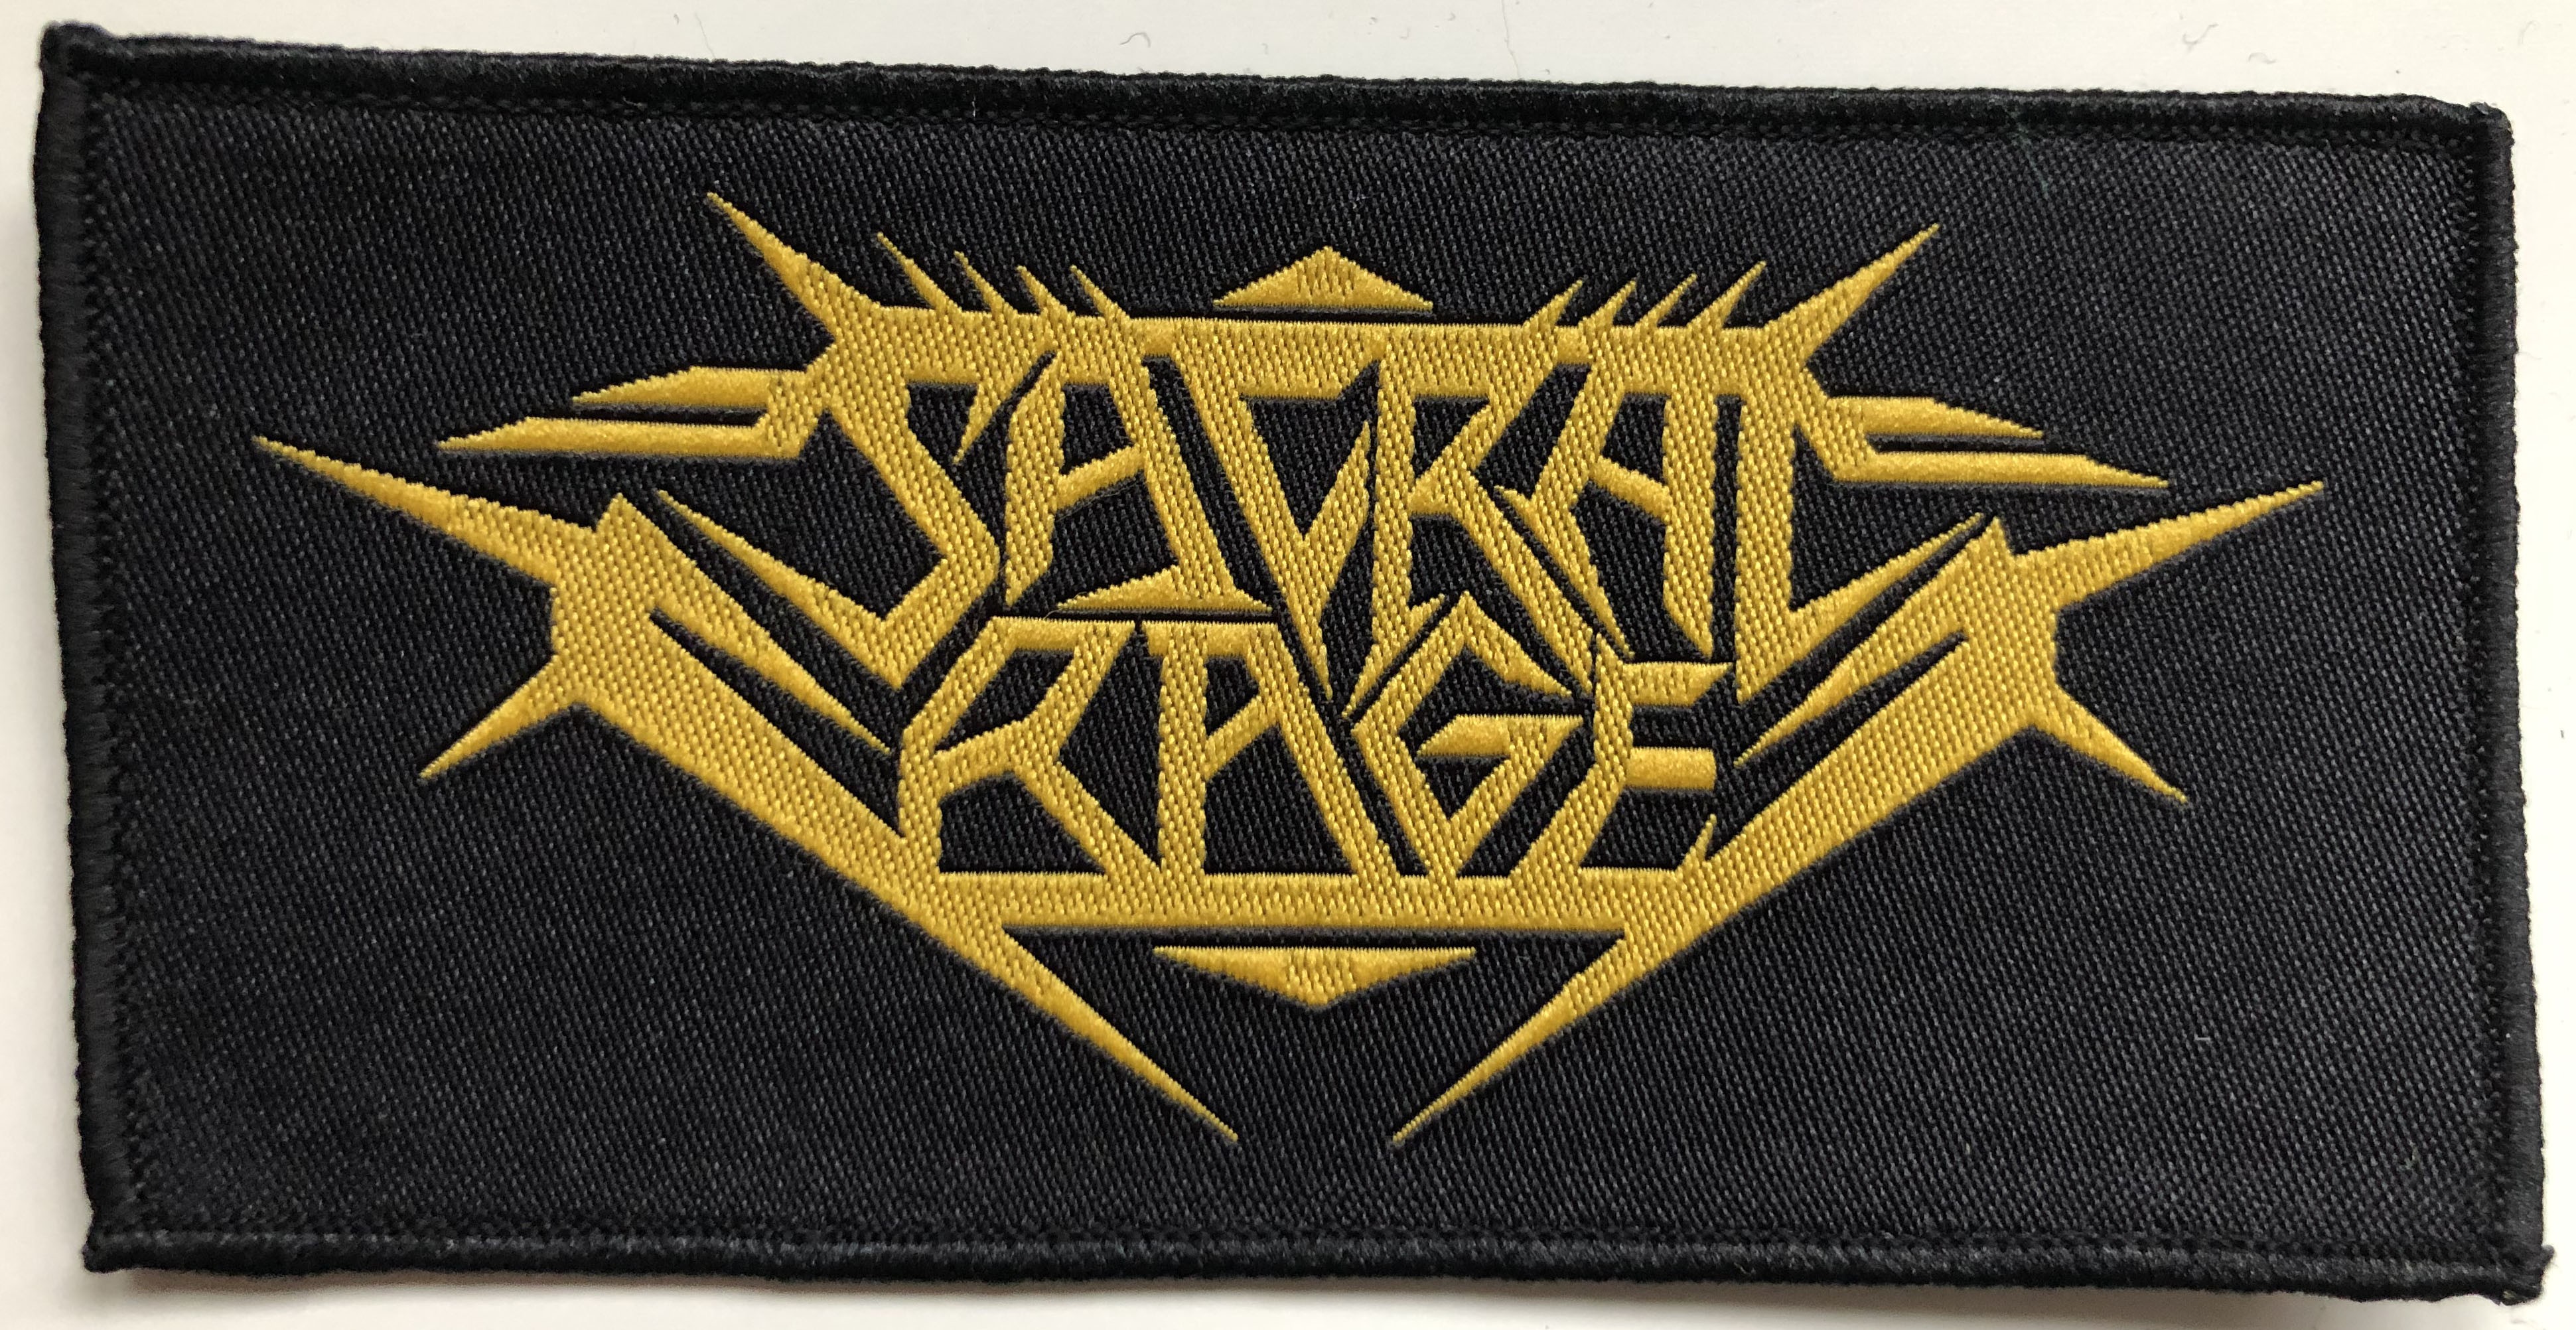 Sacral Rage - Logo